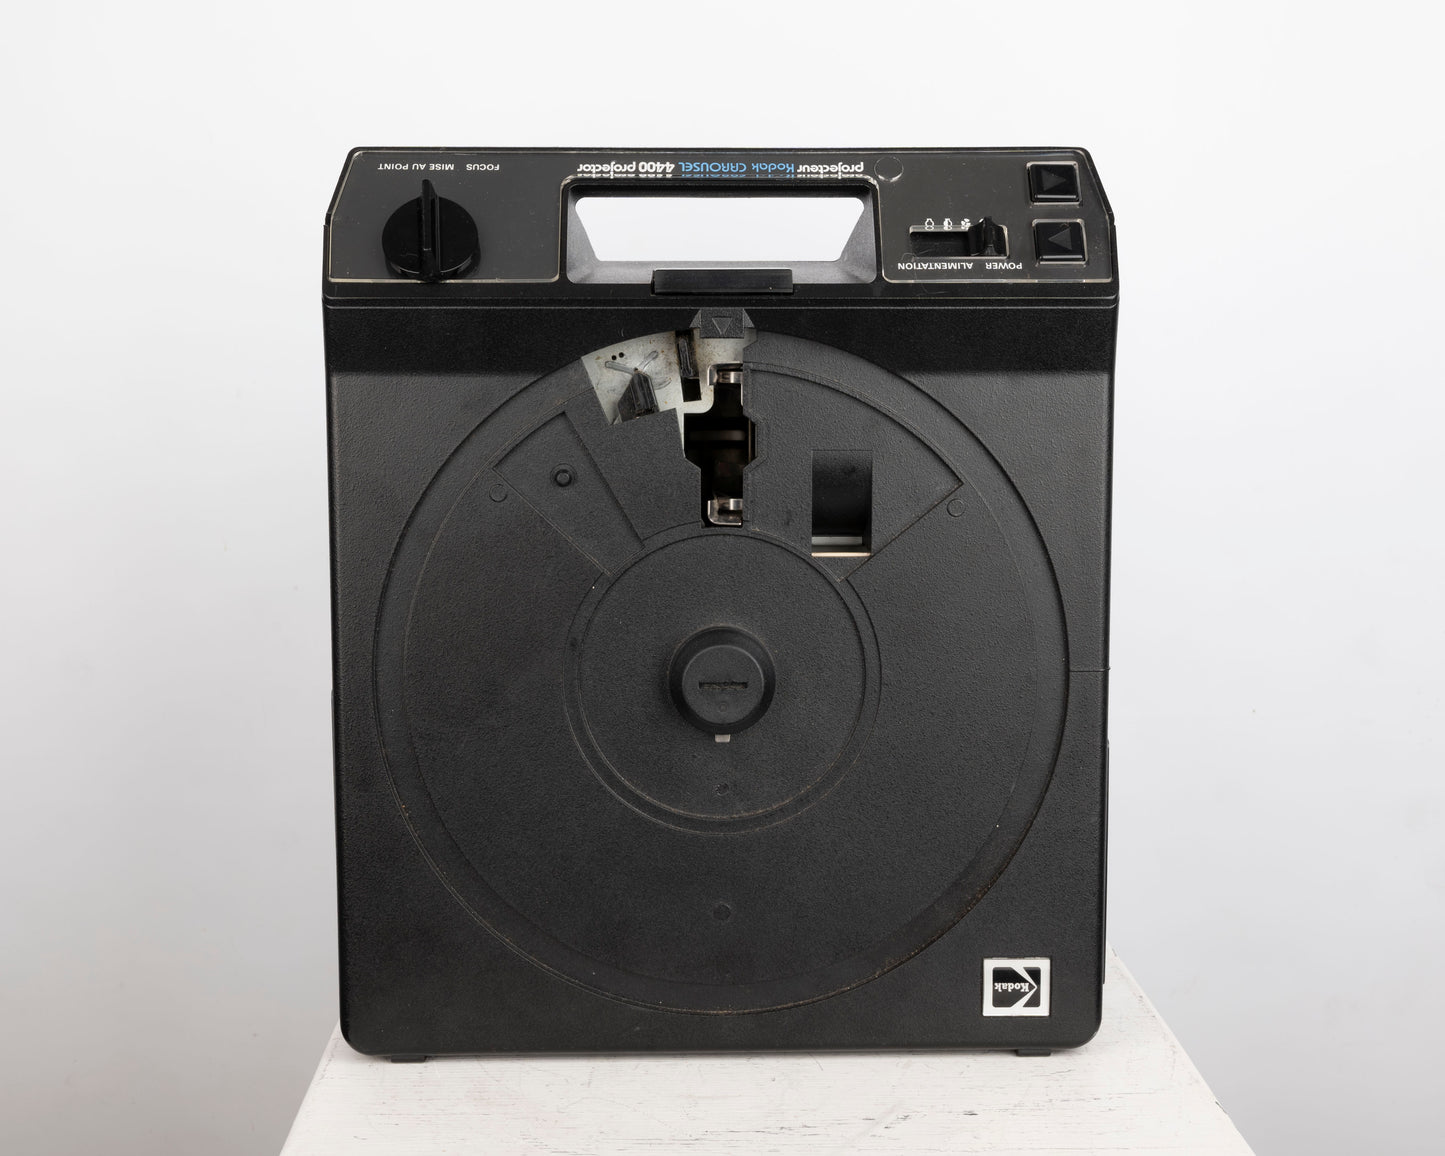 Projecteur de diapositives Kodak Carousel 4400 35 mm avec objectif Ektanar C 102 mm f2.8 (série 140686)